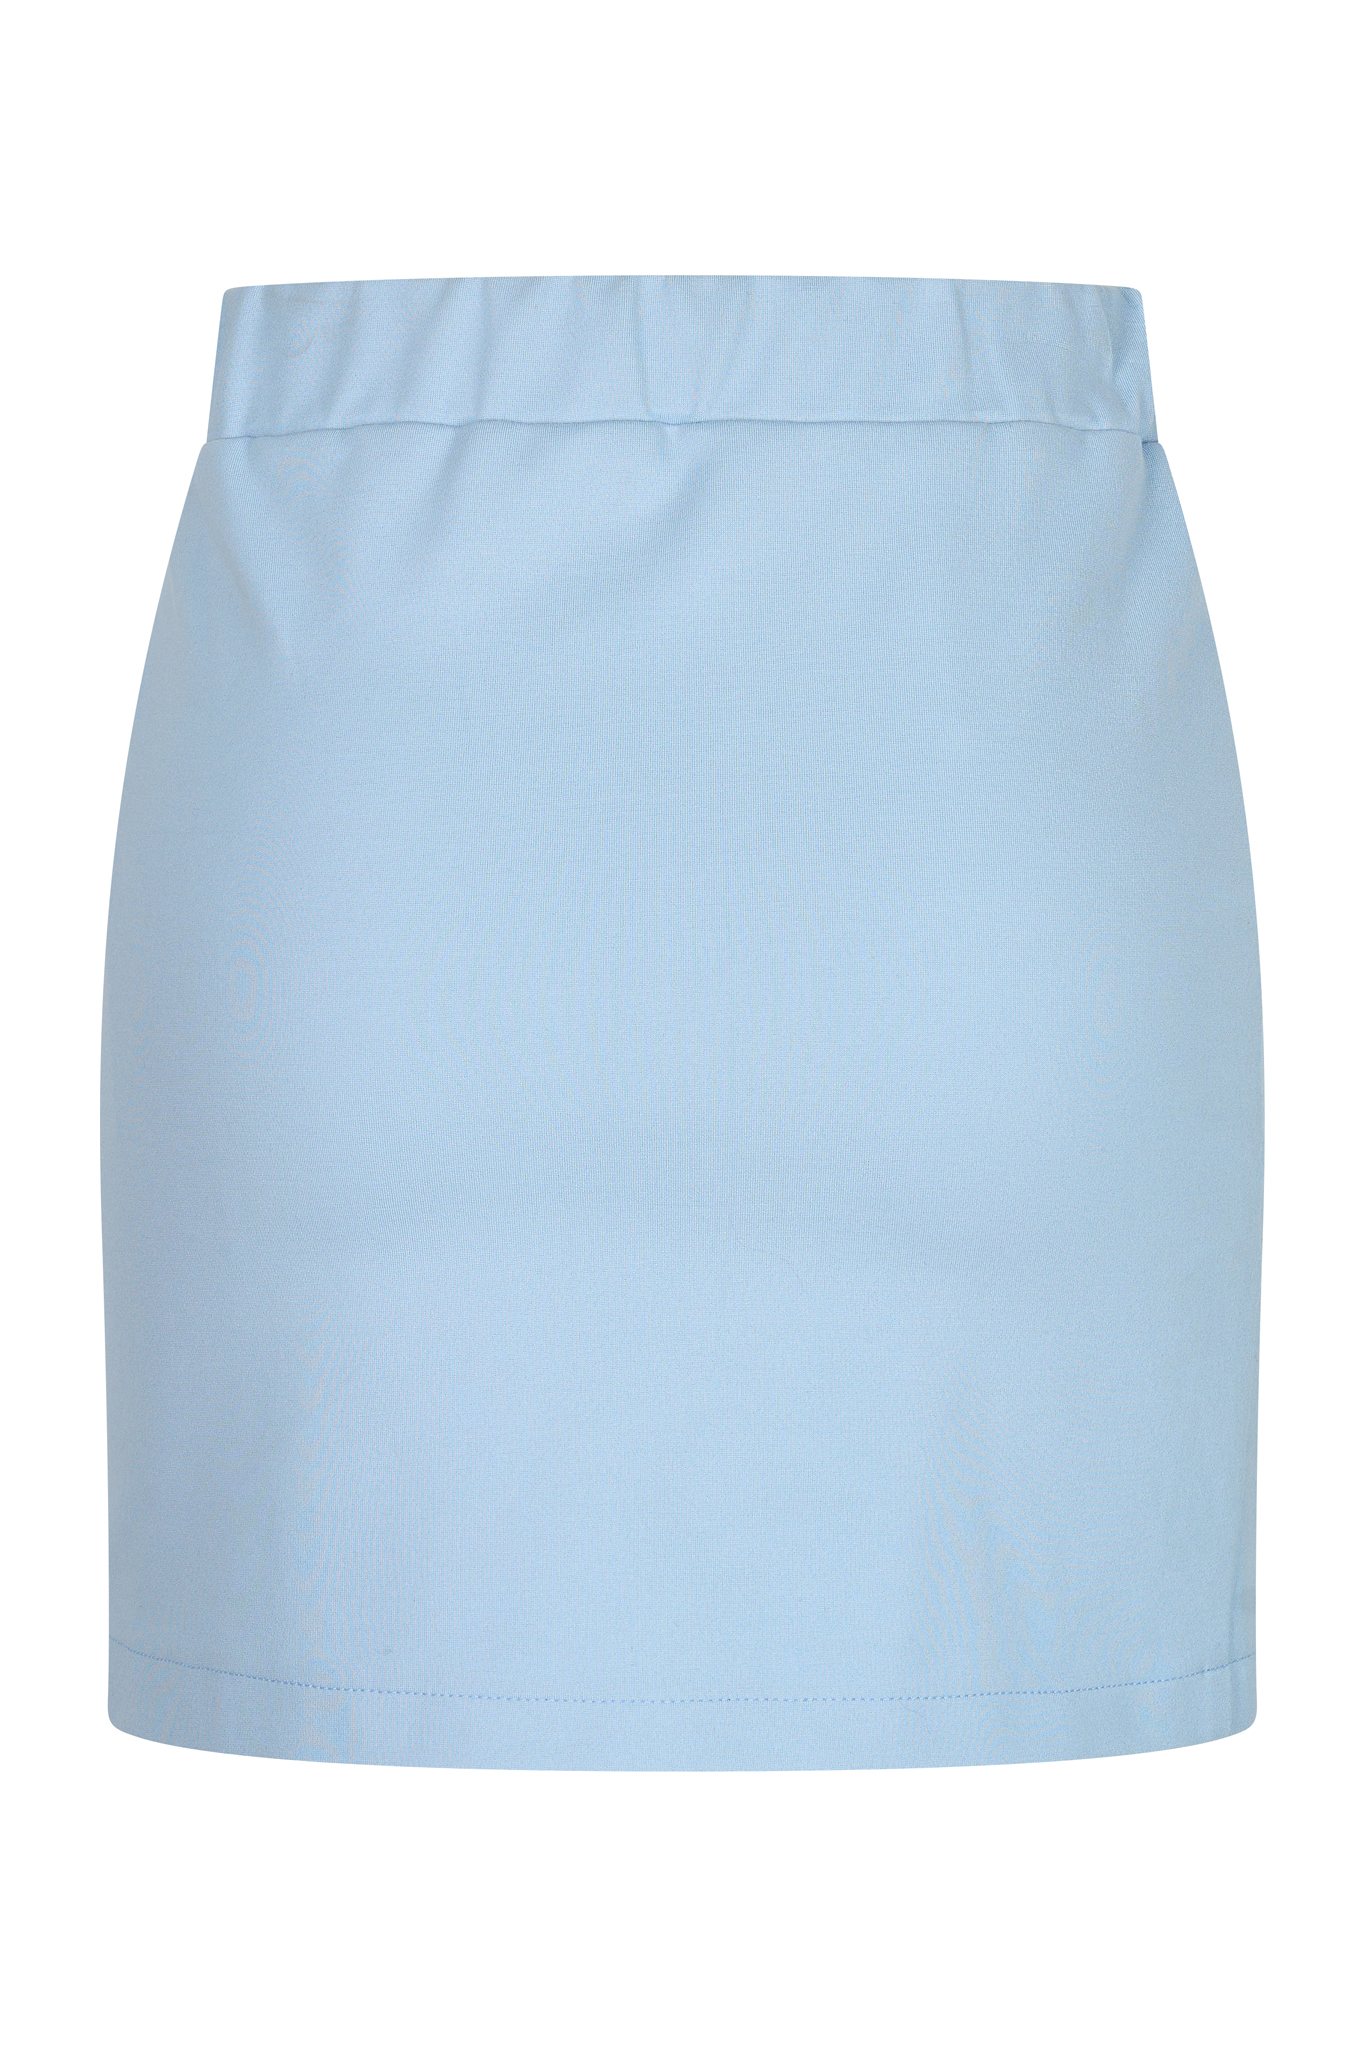 Blazer and skirt set blue